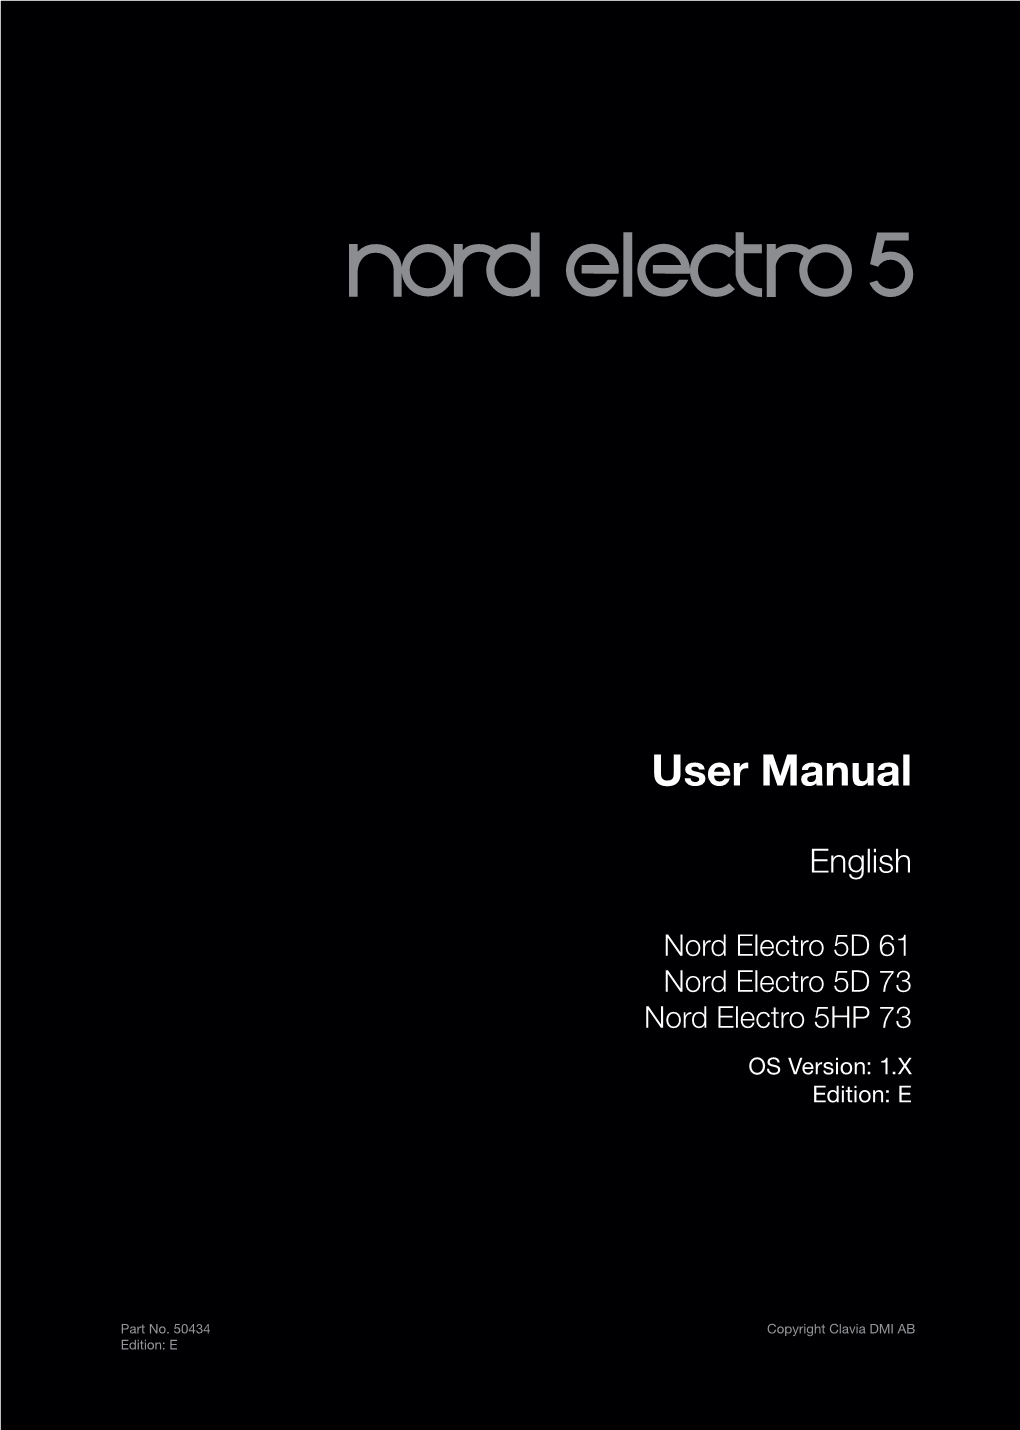 Nord Electro 5 English User Manual V1.X Edition E.Pdf